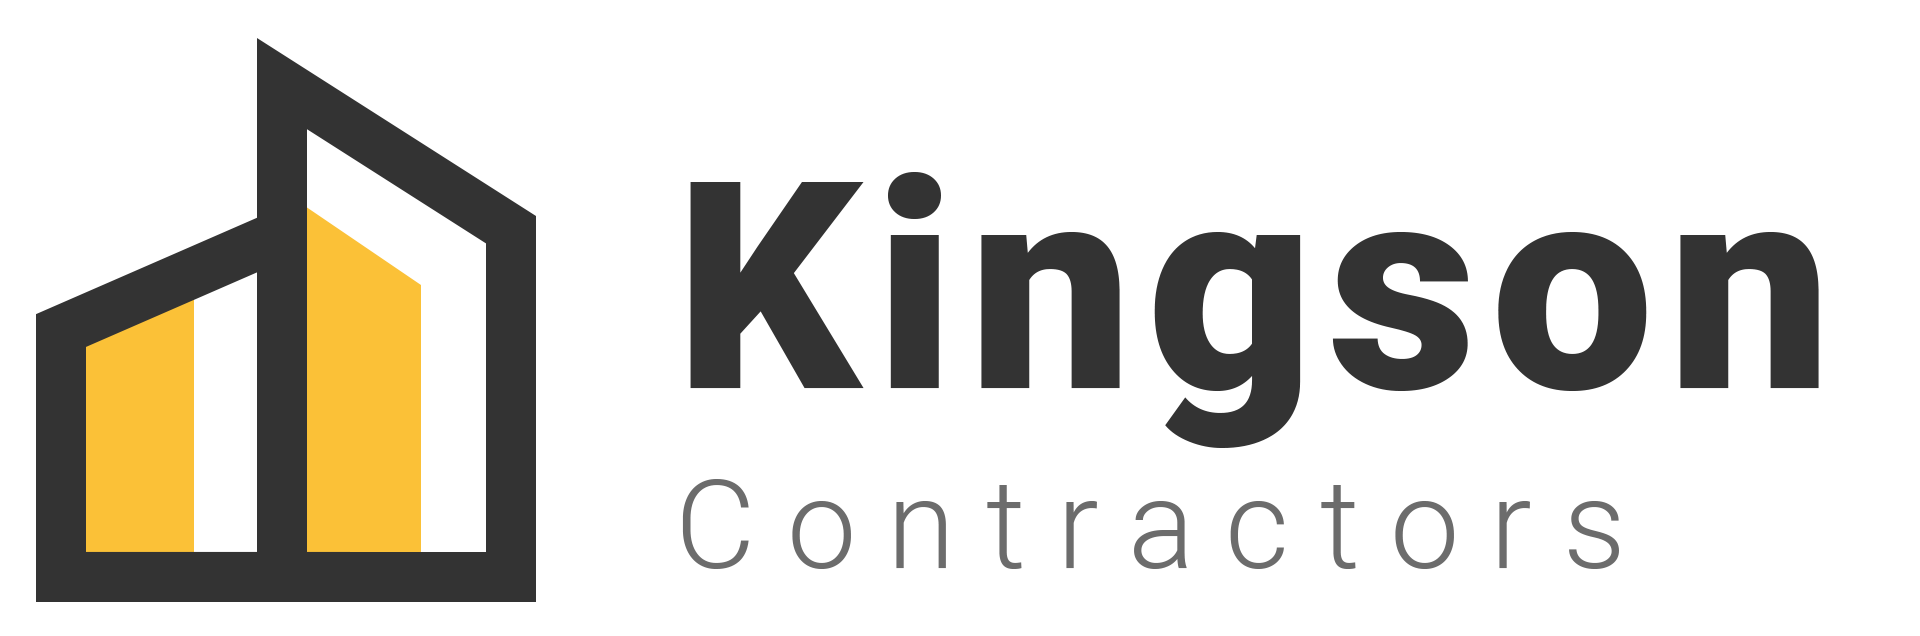 Kingston black logo